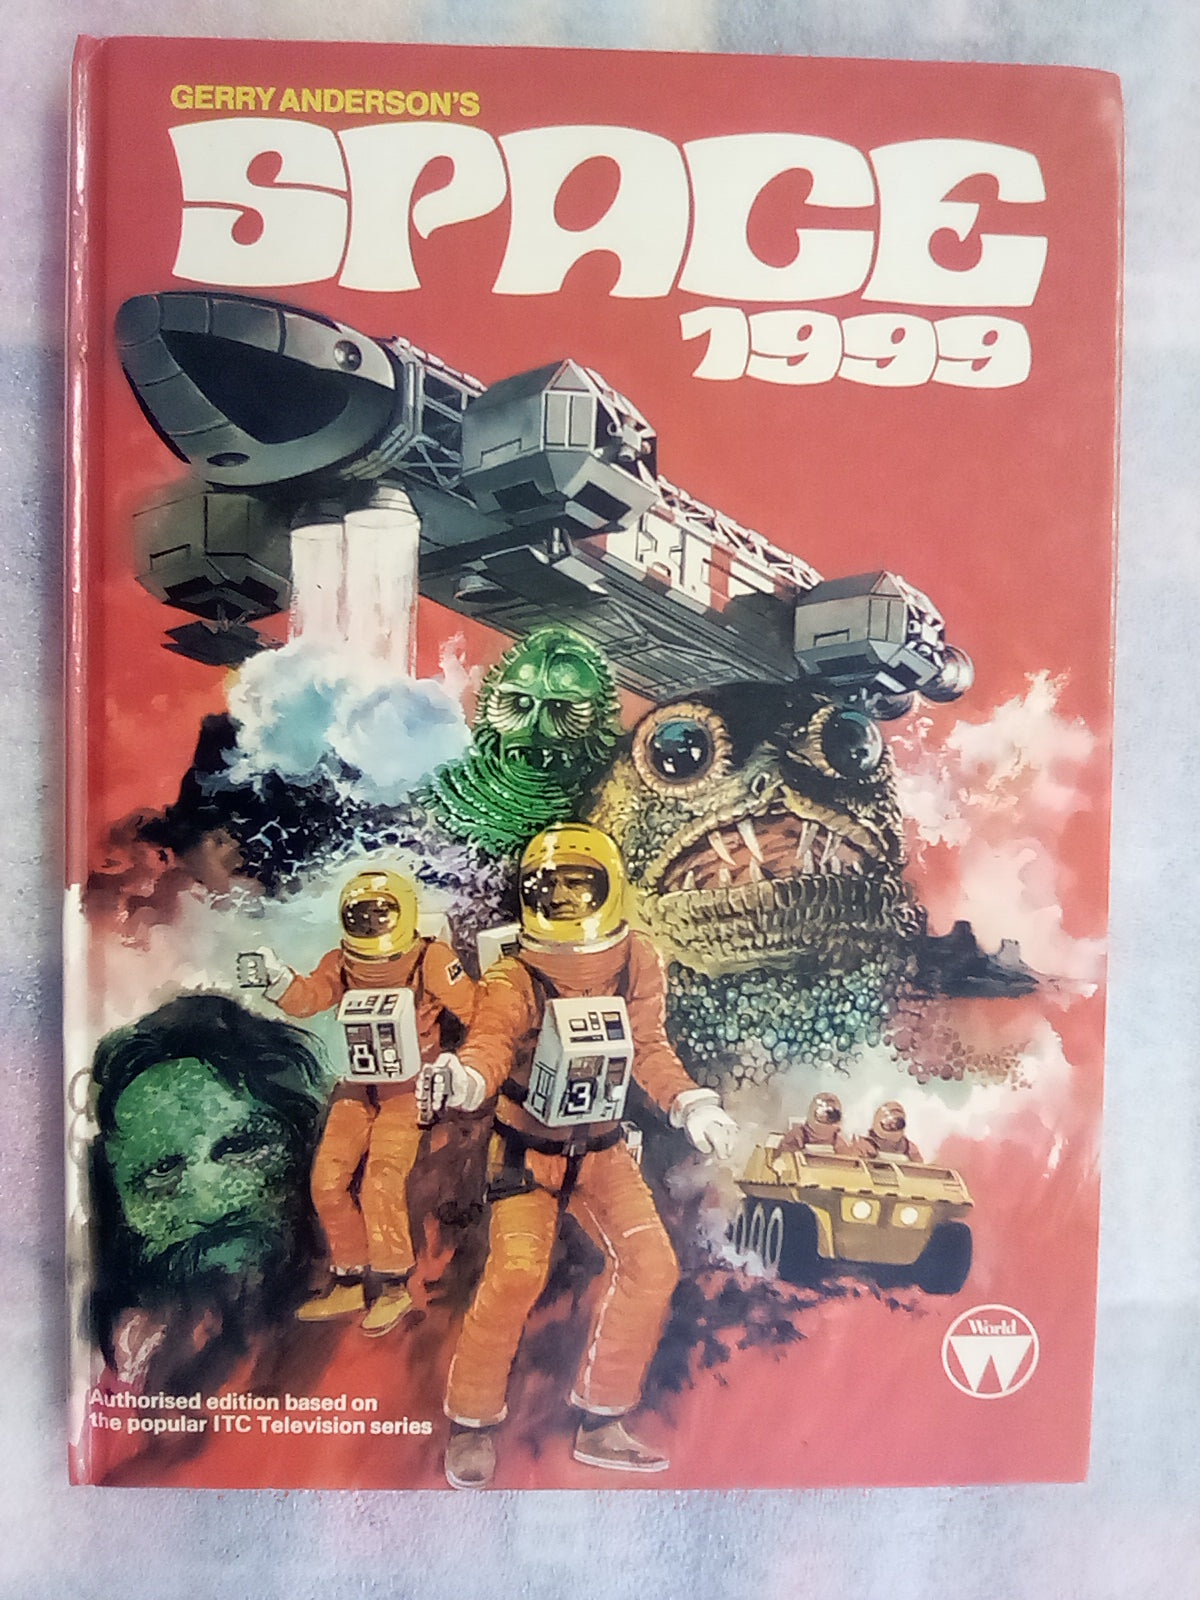 Space 1999 Annual 1979